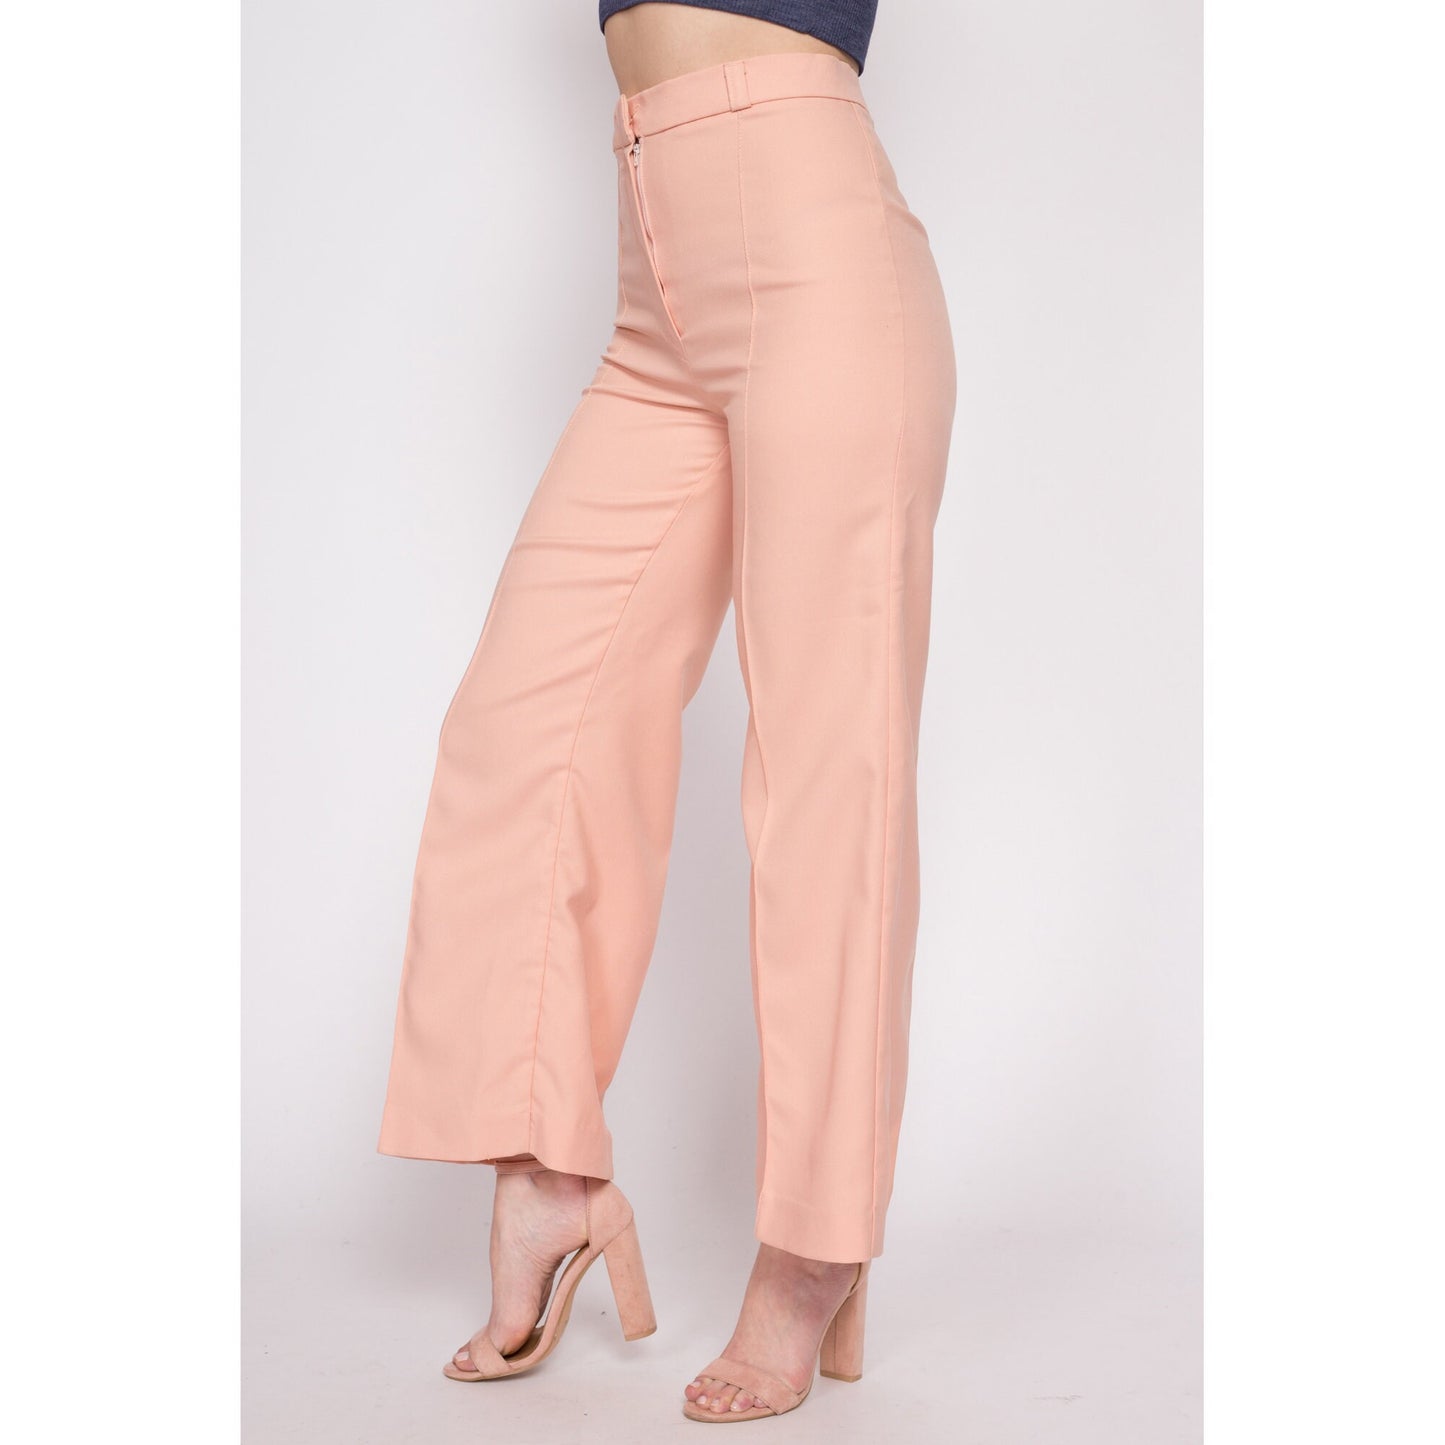 70s Peach Pink Flared Pants - Medium, 28"